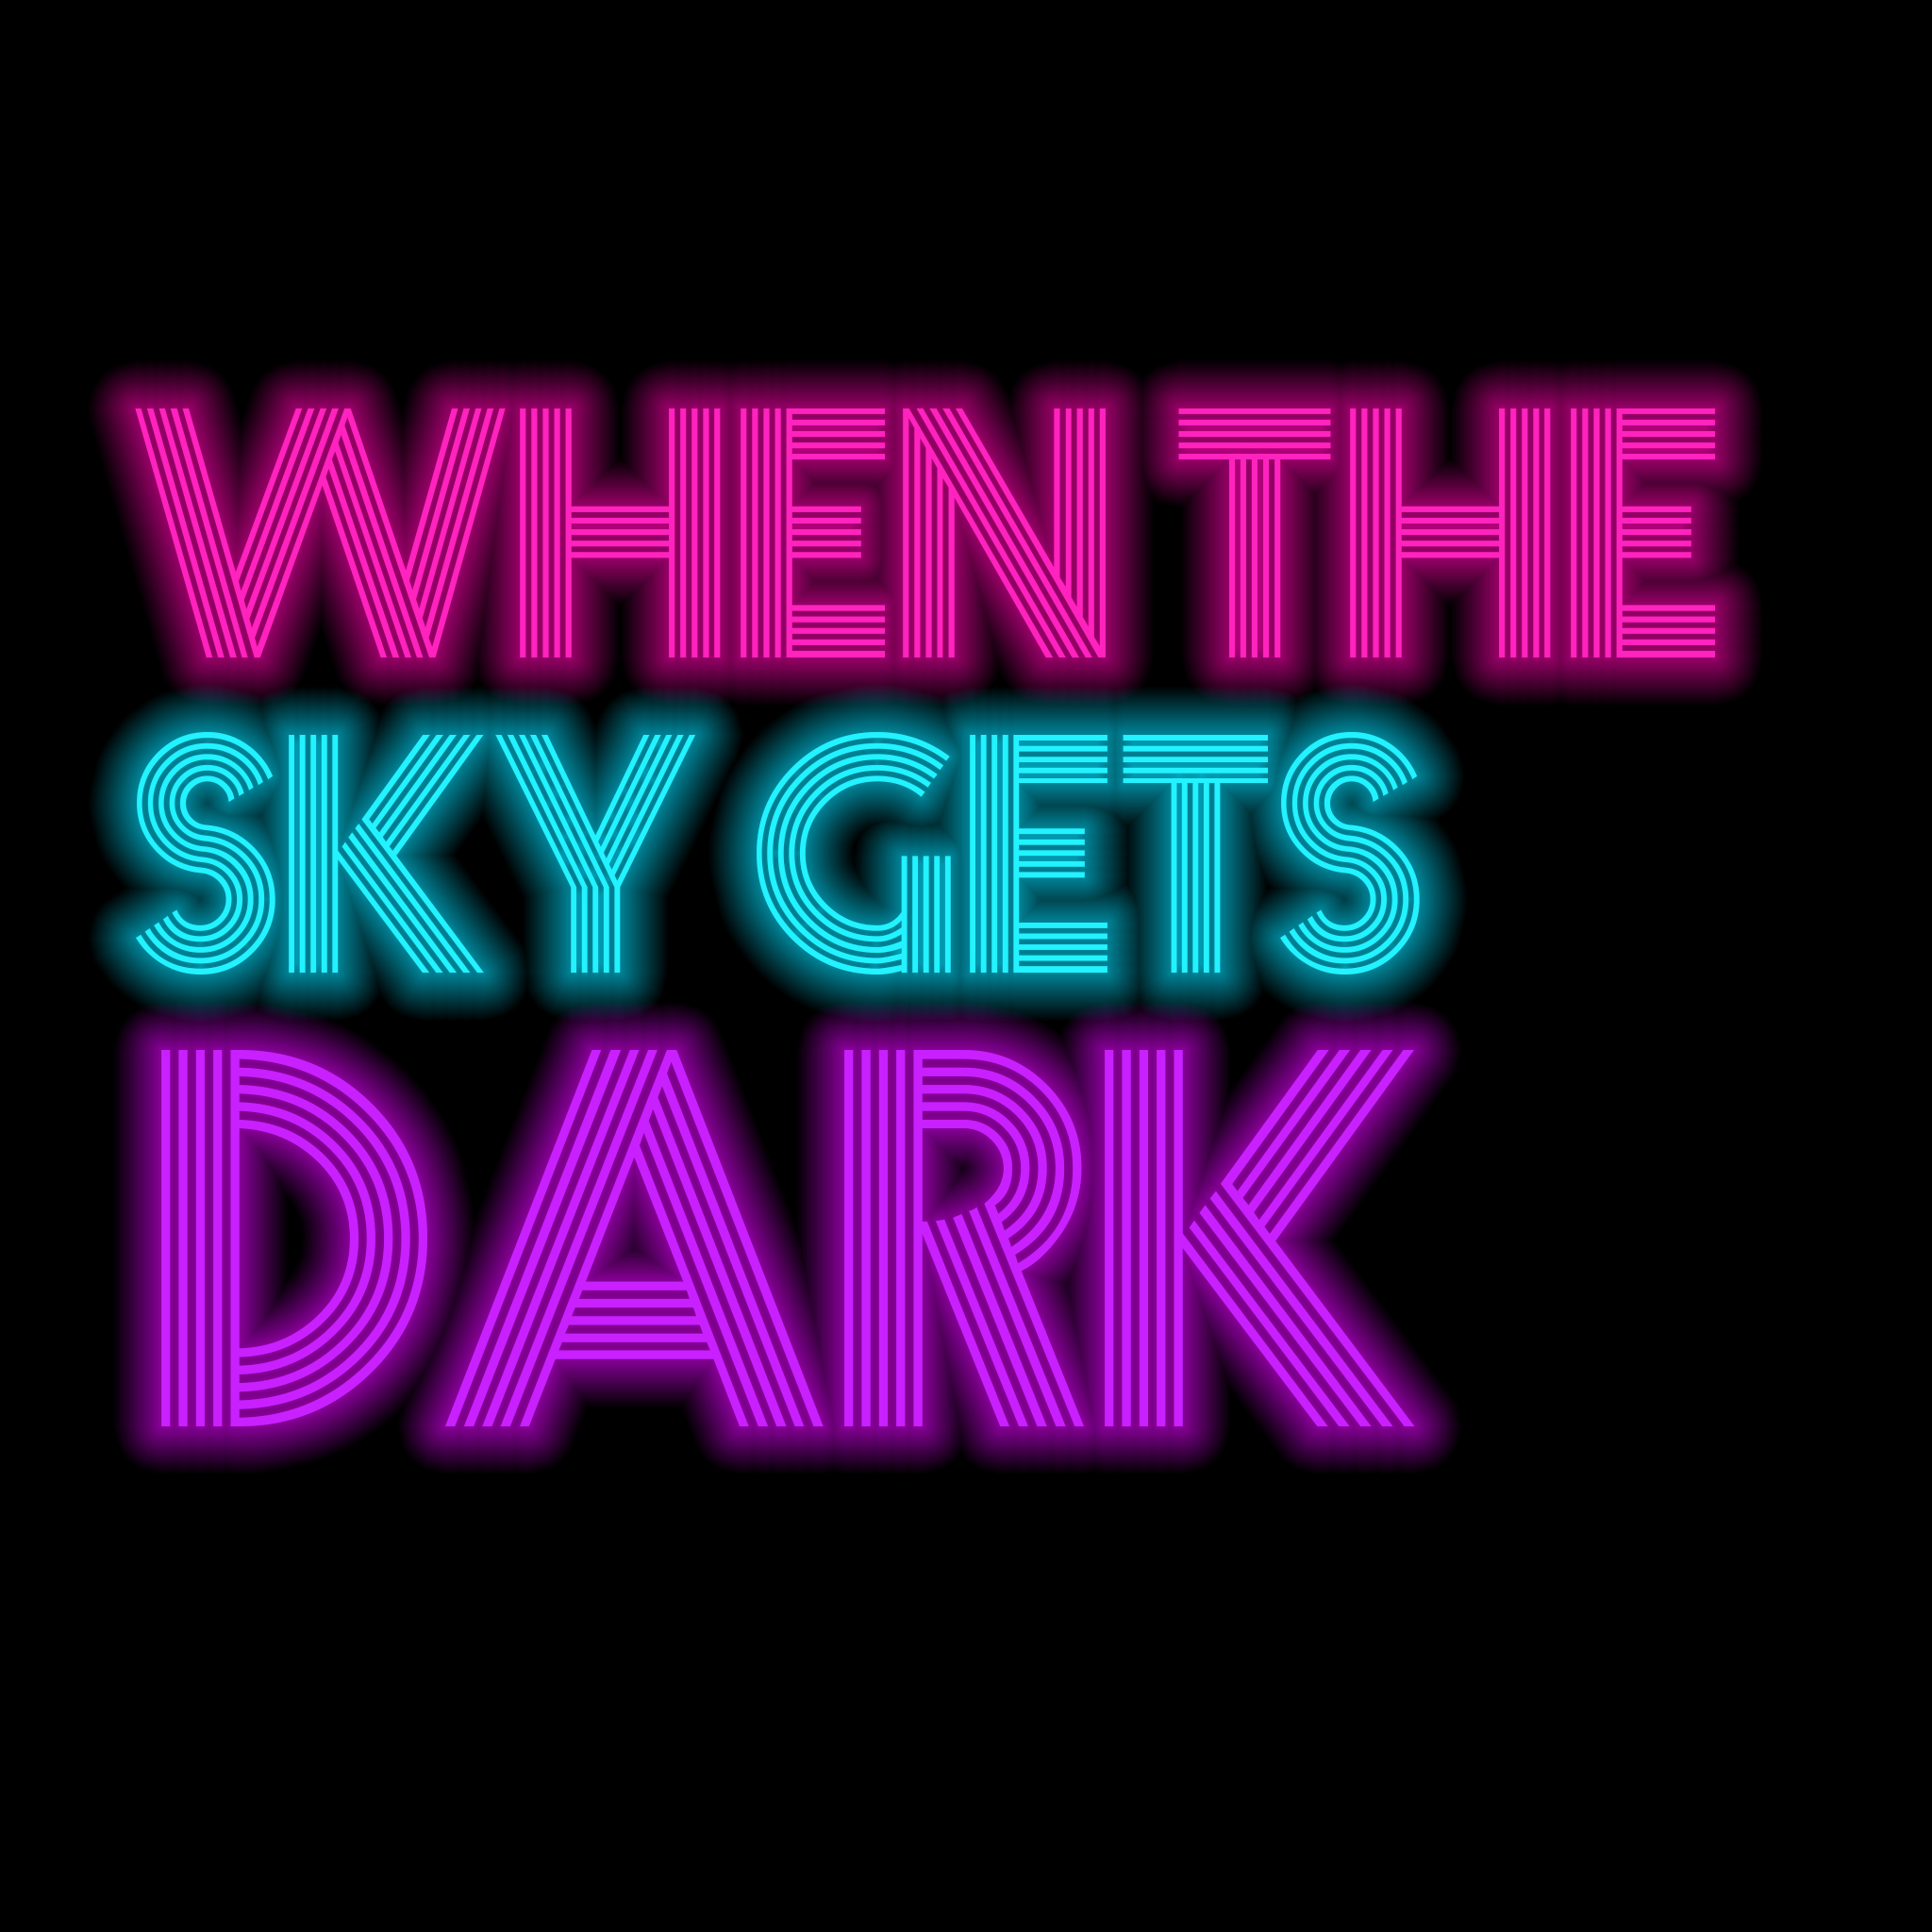 When the sky gets dark